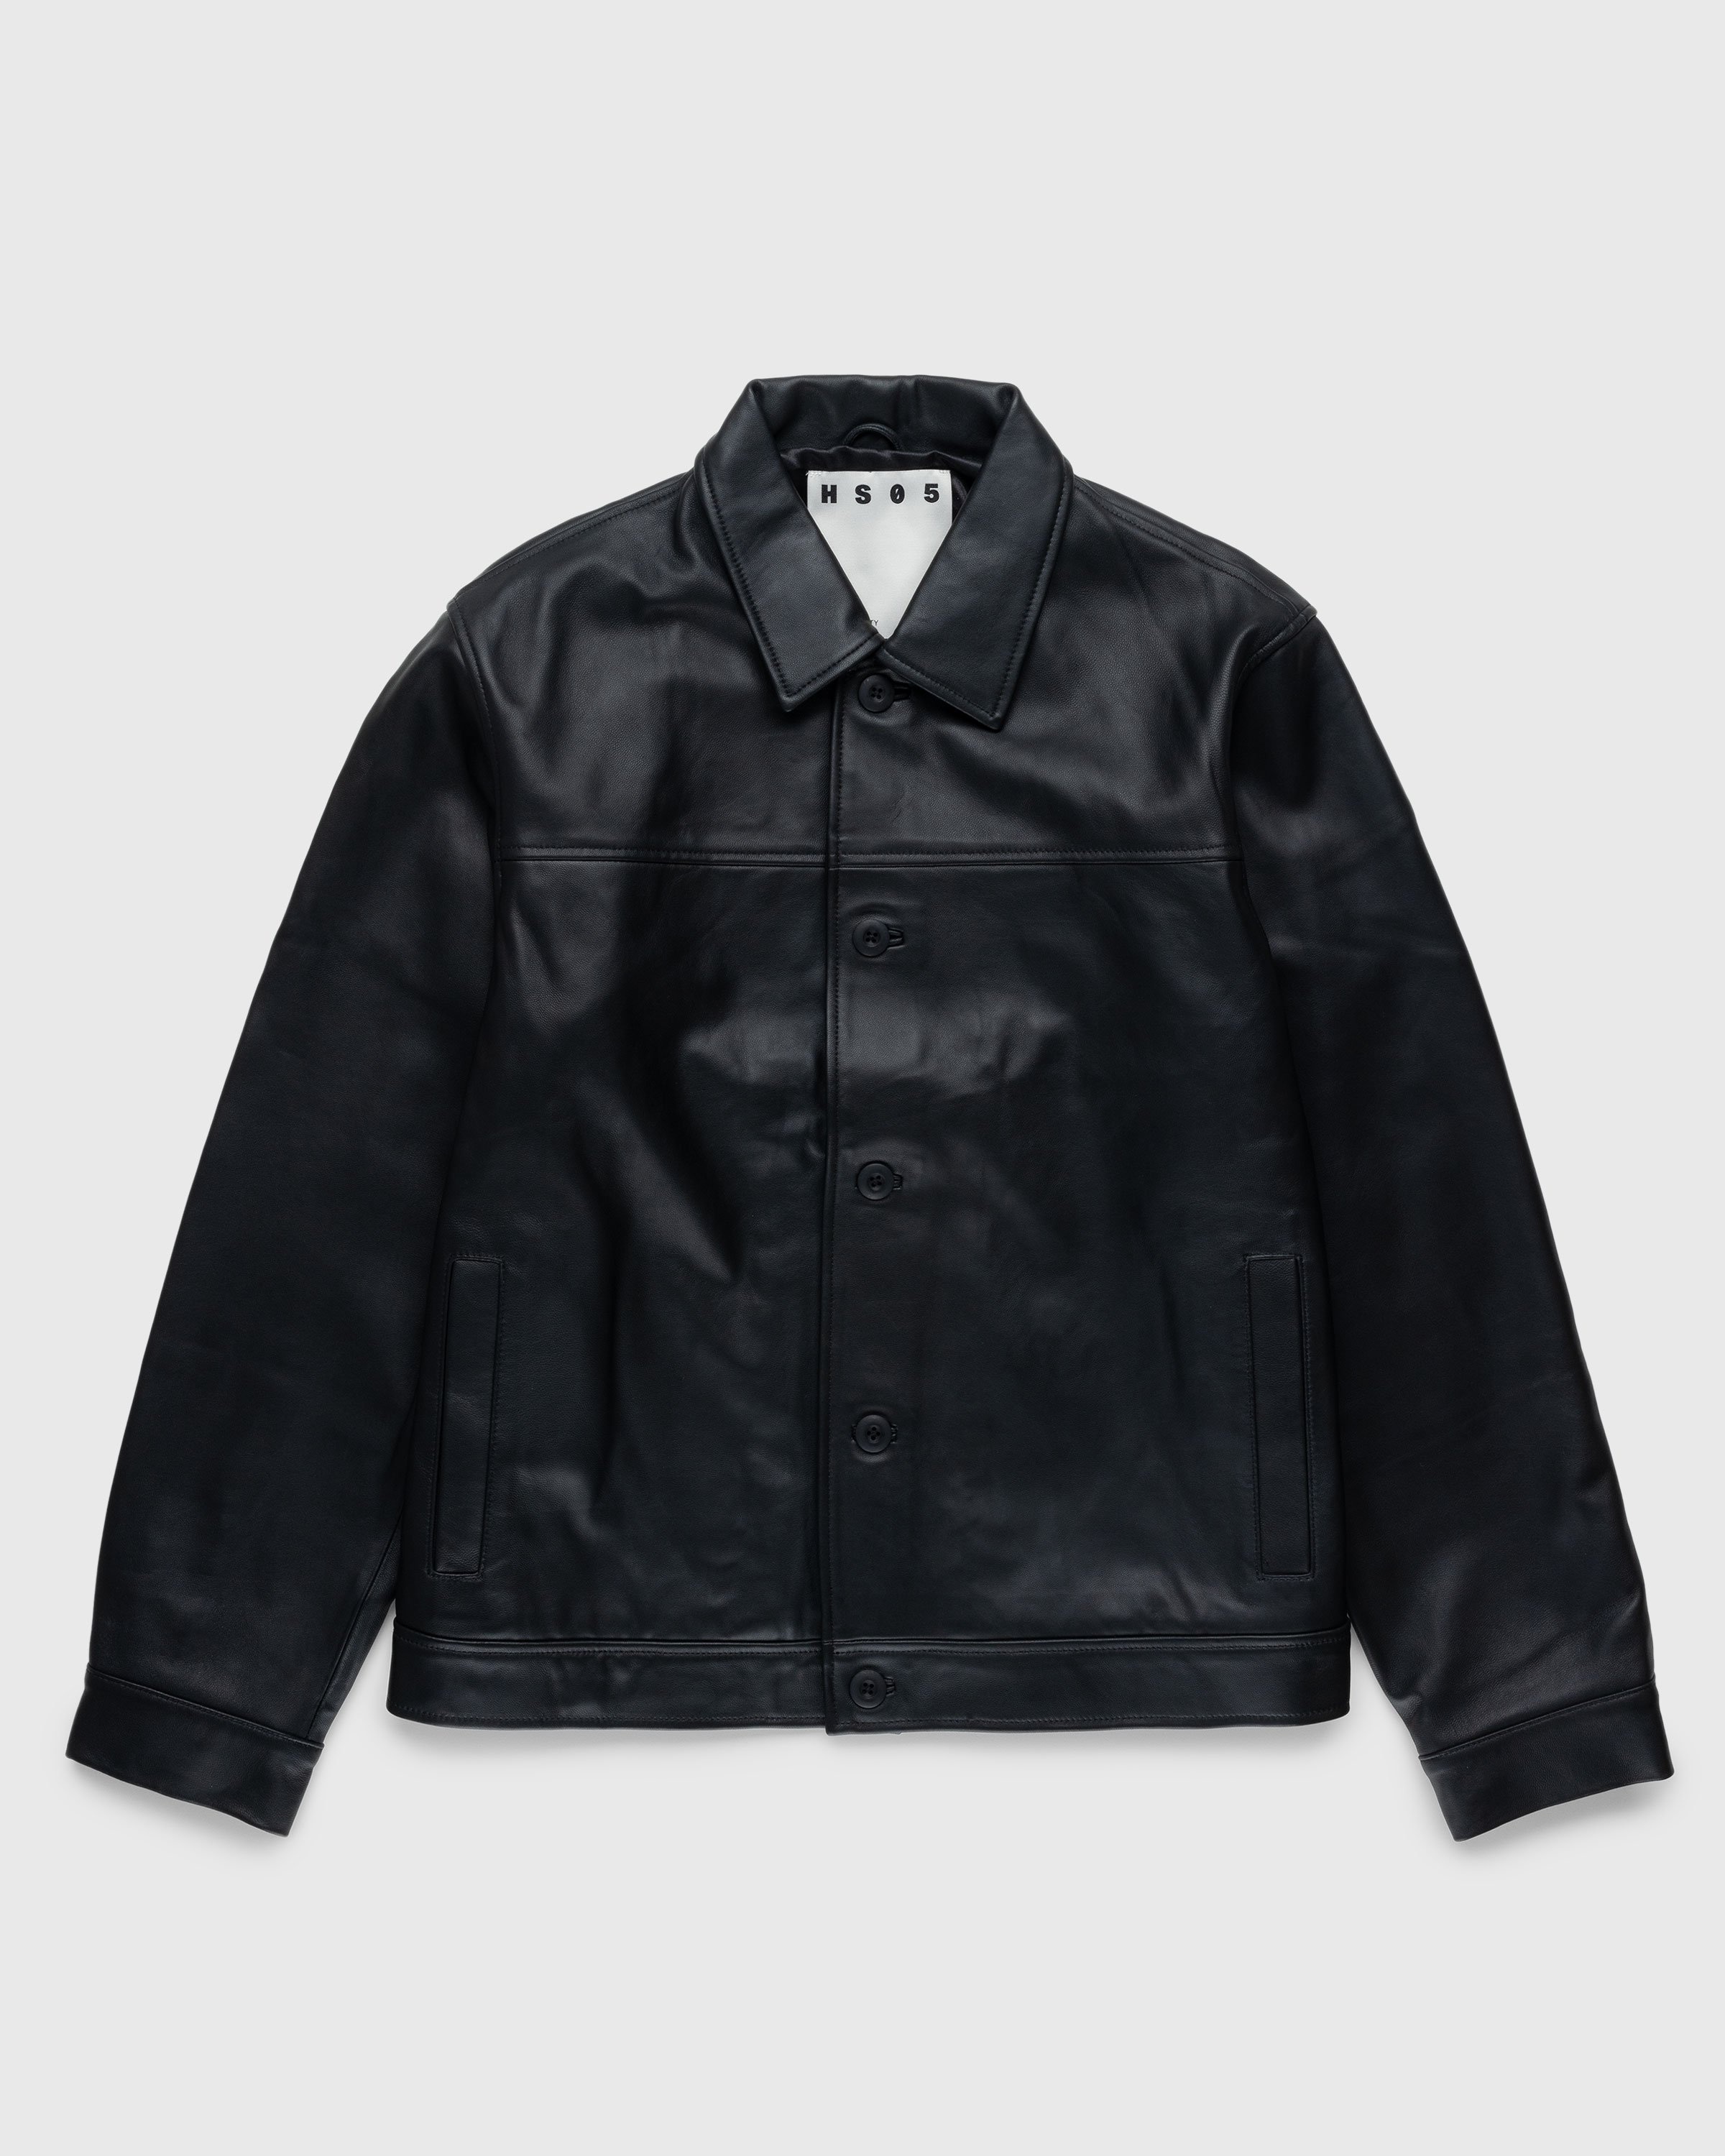 Highsnobiety HS05 – Leather Jacket Black - Outerwear - Black - Image 1